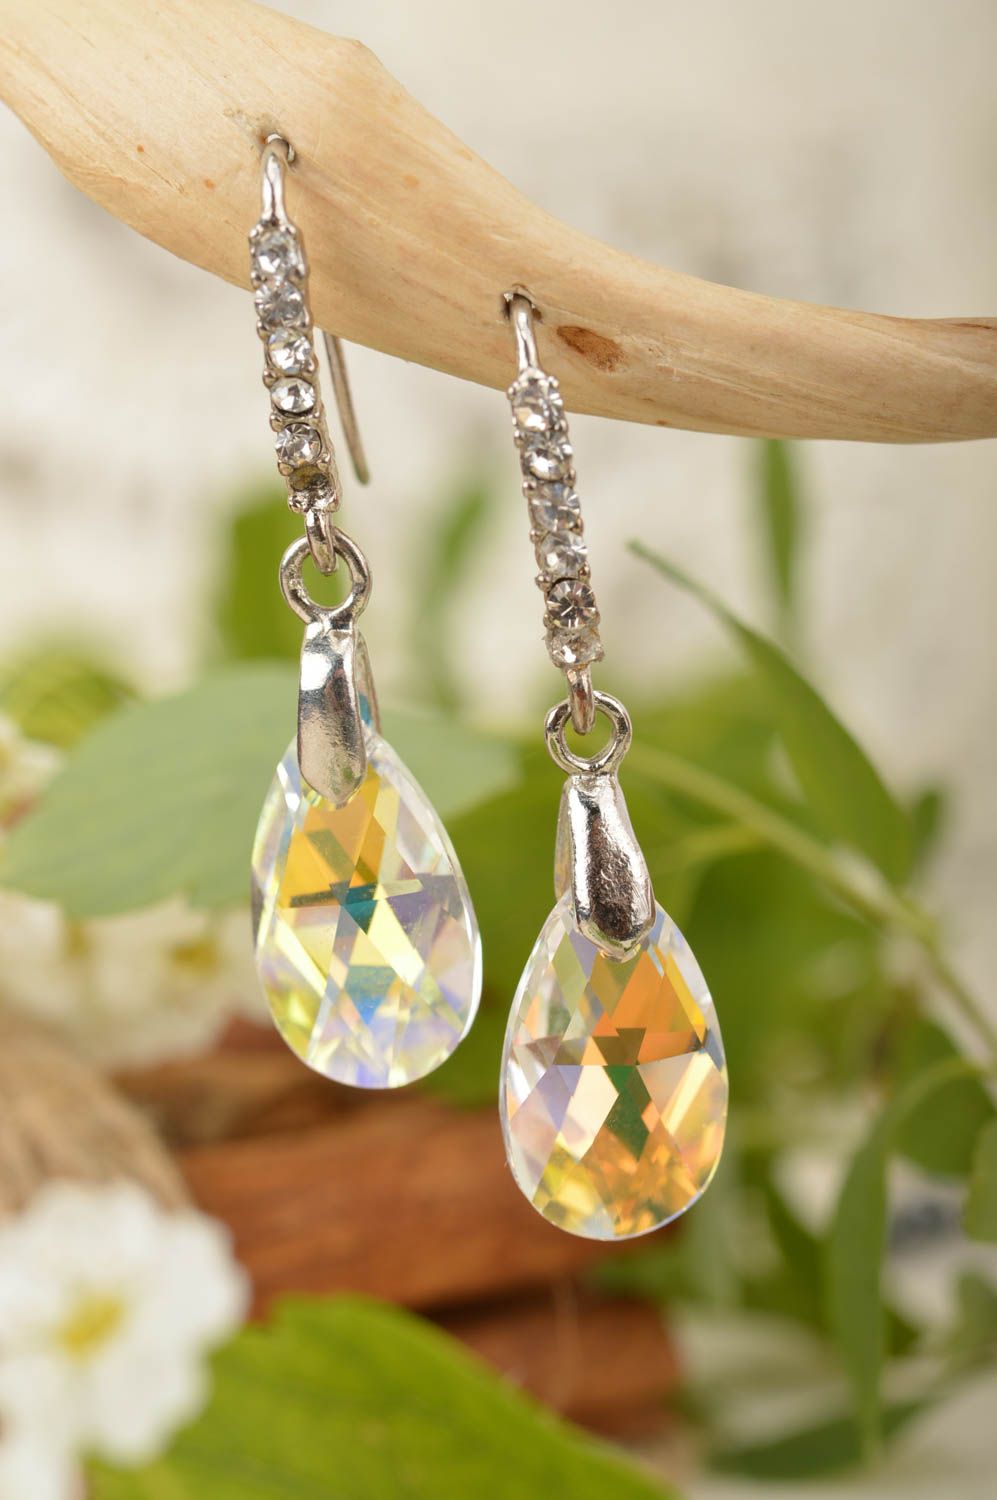 Handmade jewelry Austrian crystals earrings  teardrop - shaped accessories photo 1